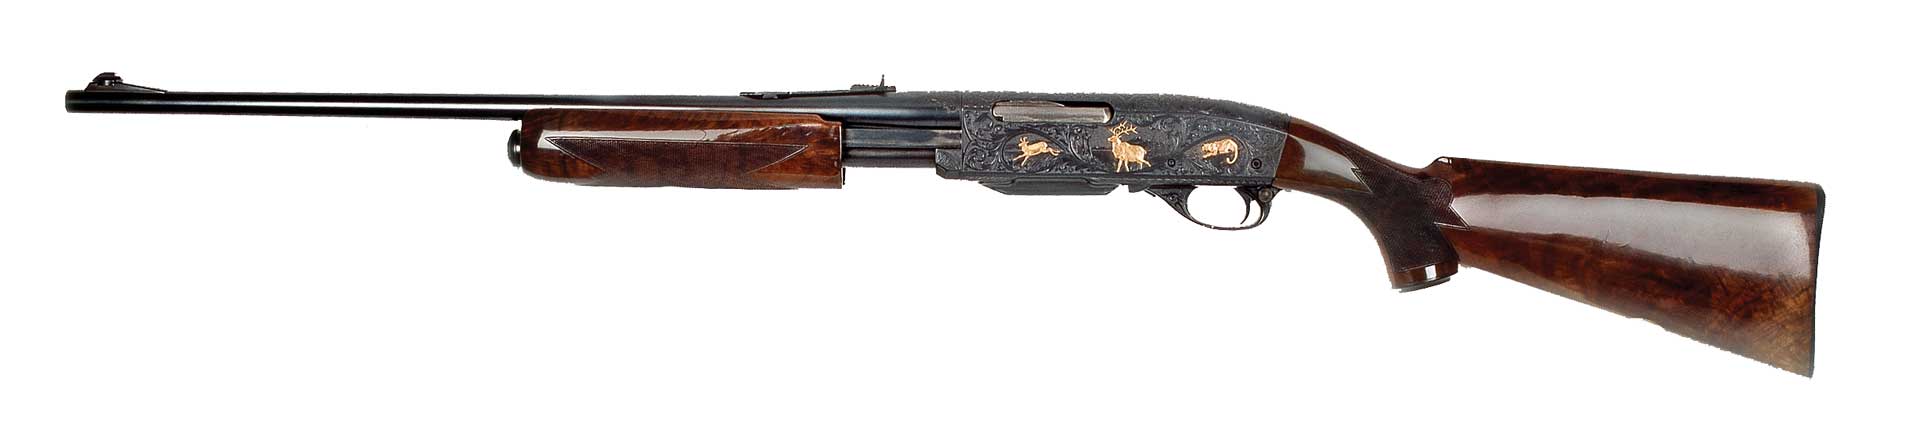 left-side view Remington Arms pump-action rifle firearm gun Model 760 hunting rifle gold engraving